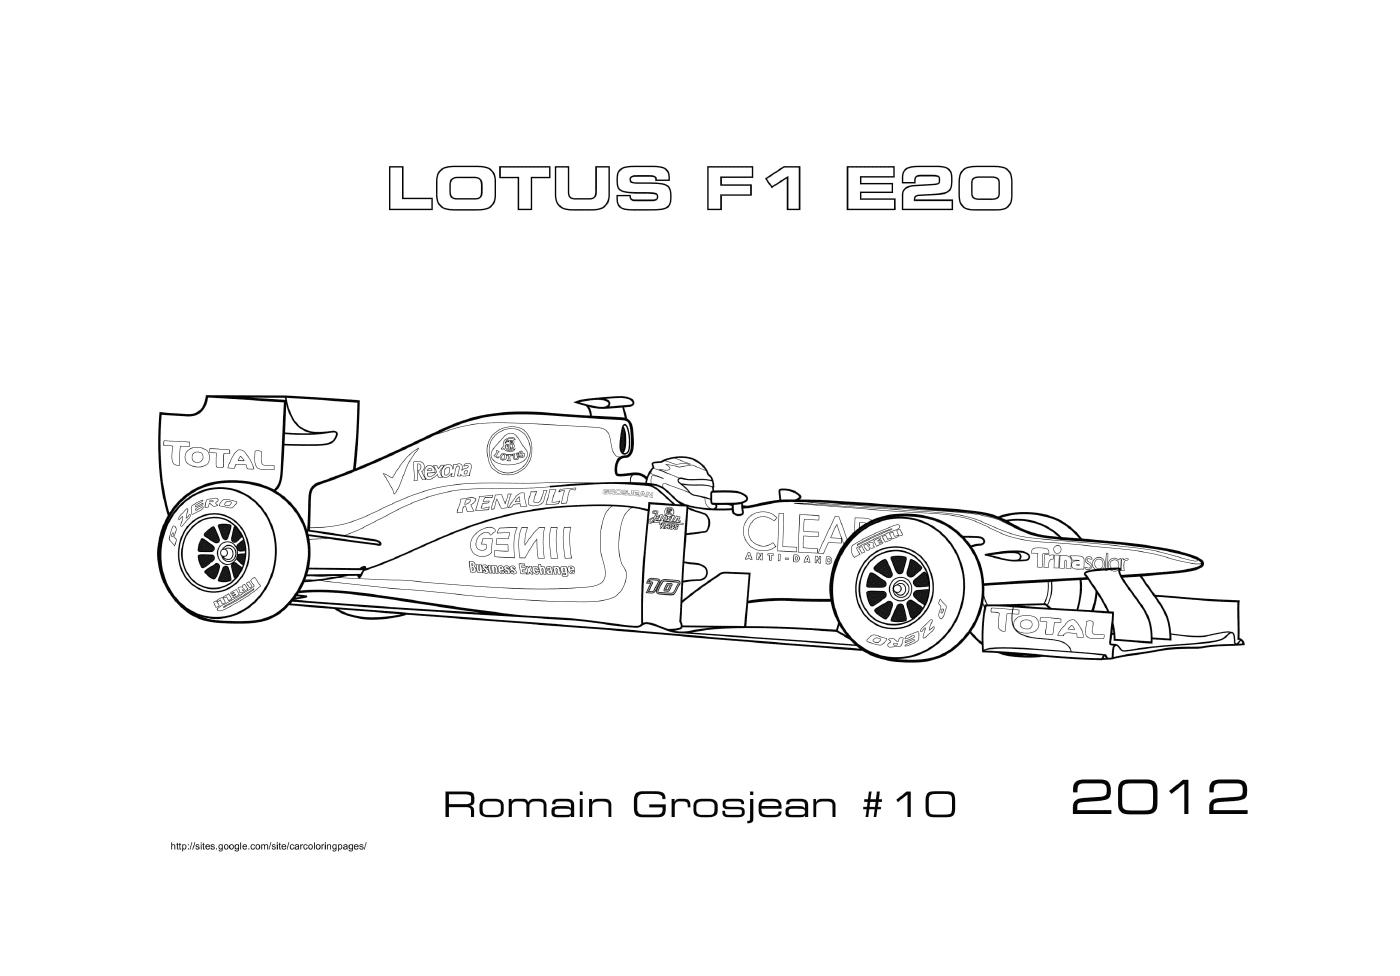  Lotus E20 coche de carreras de Romain Grosjean 